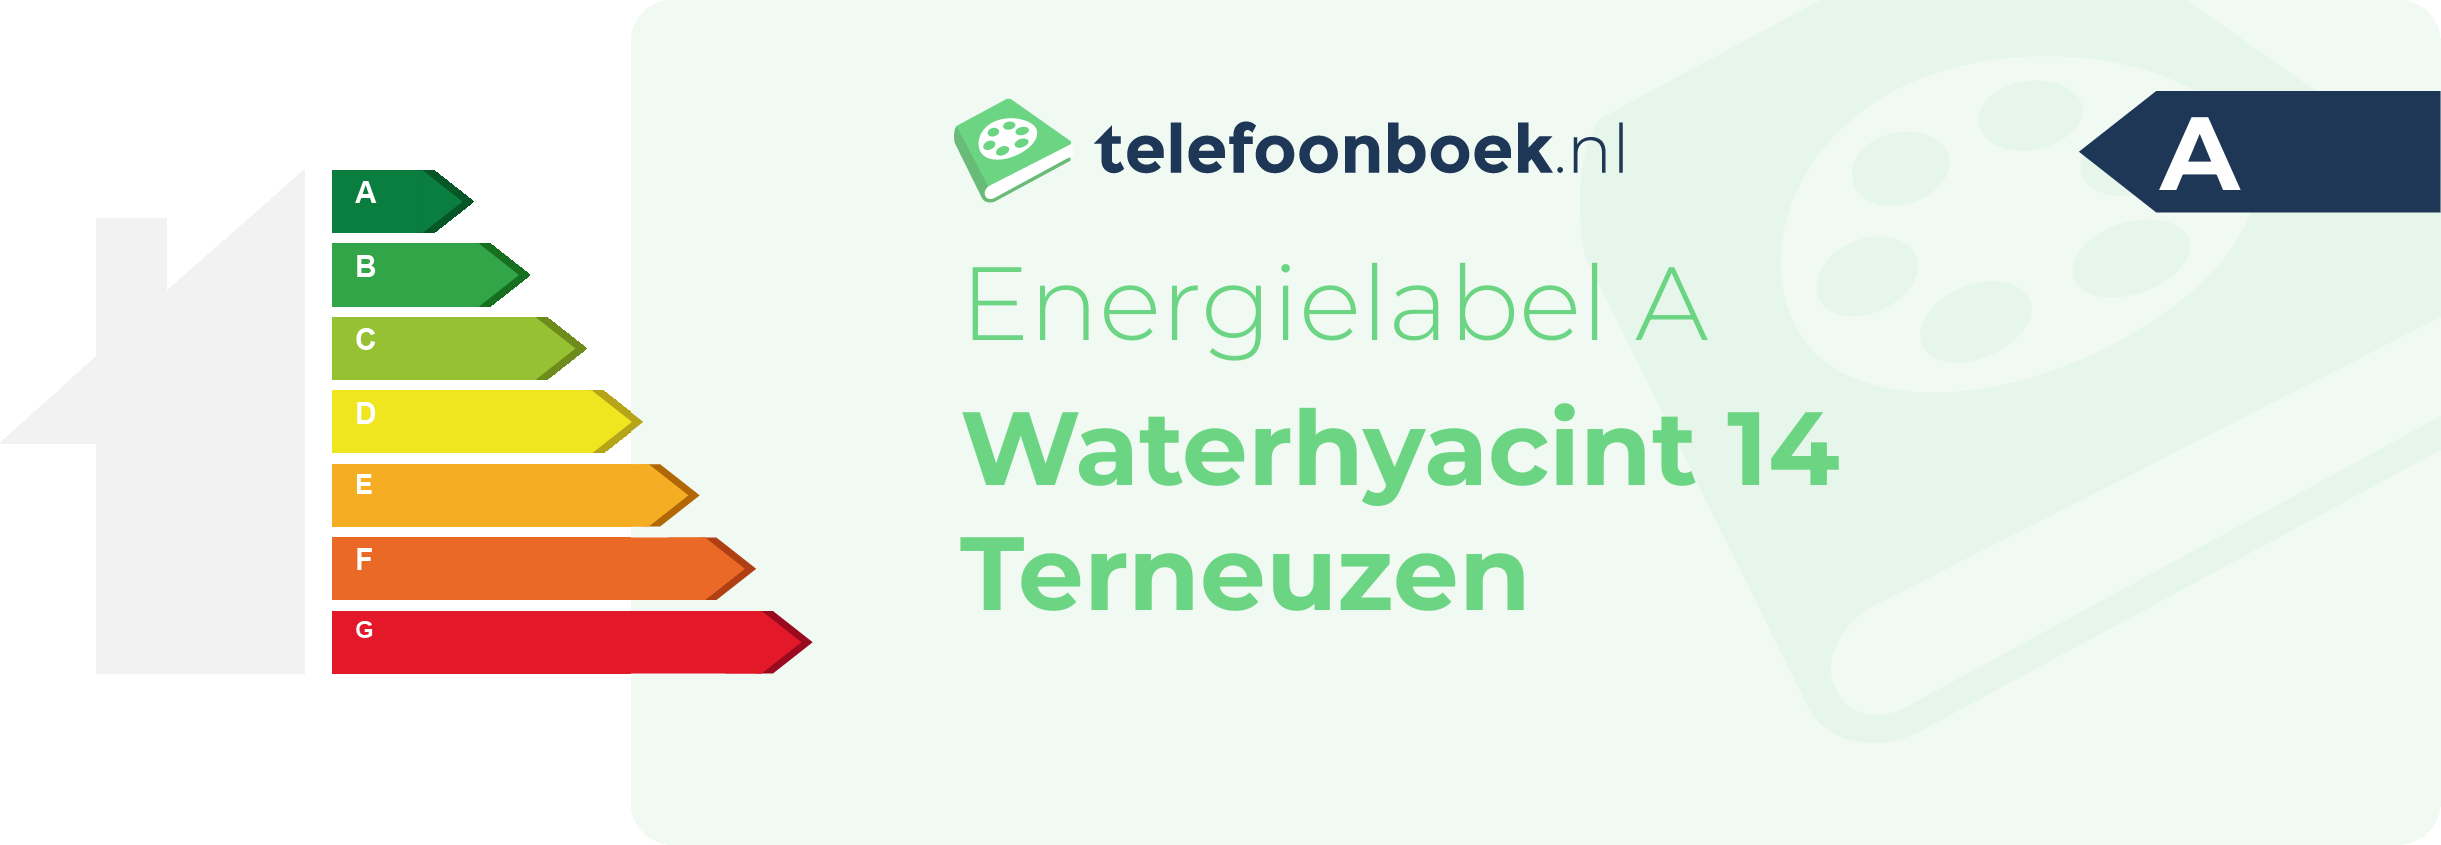 Energielabel Waterhyacint 14 Terneuzen